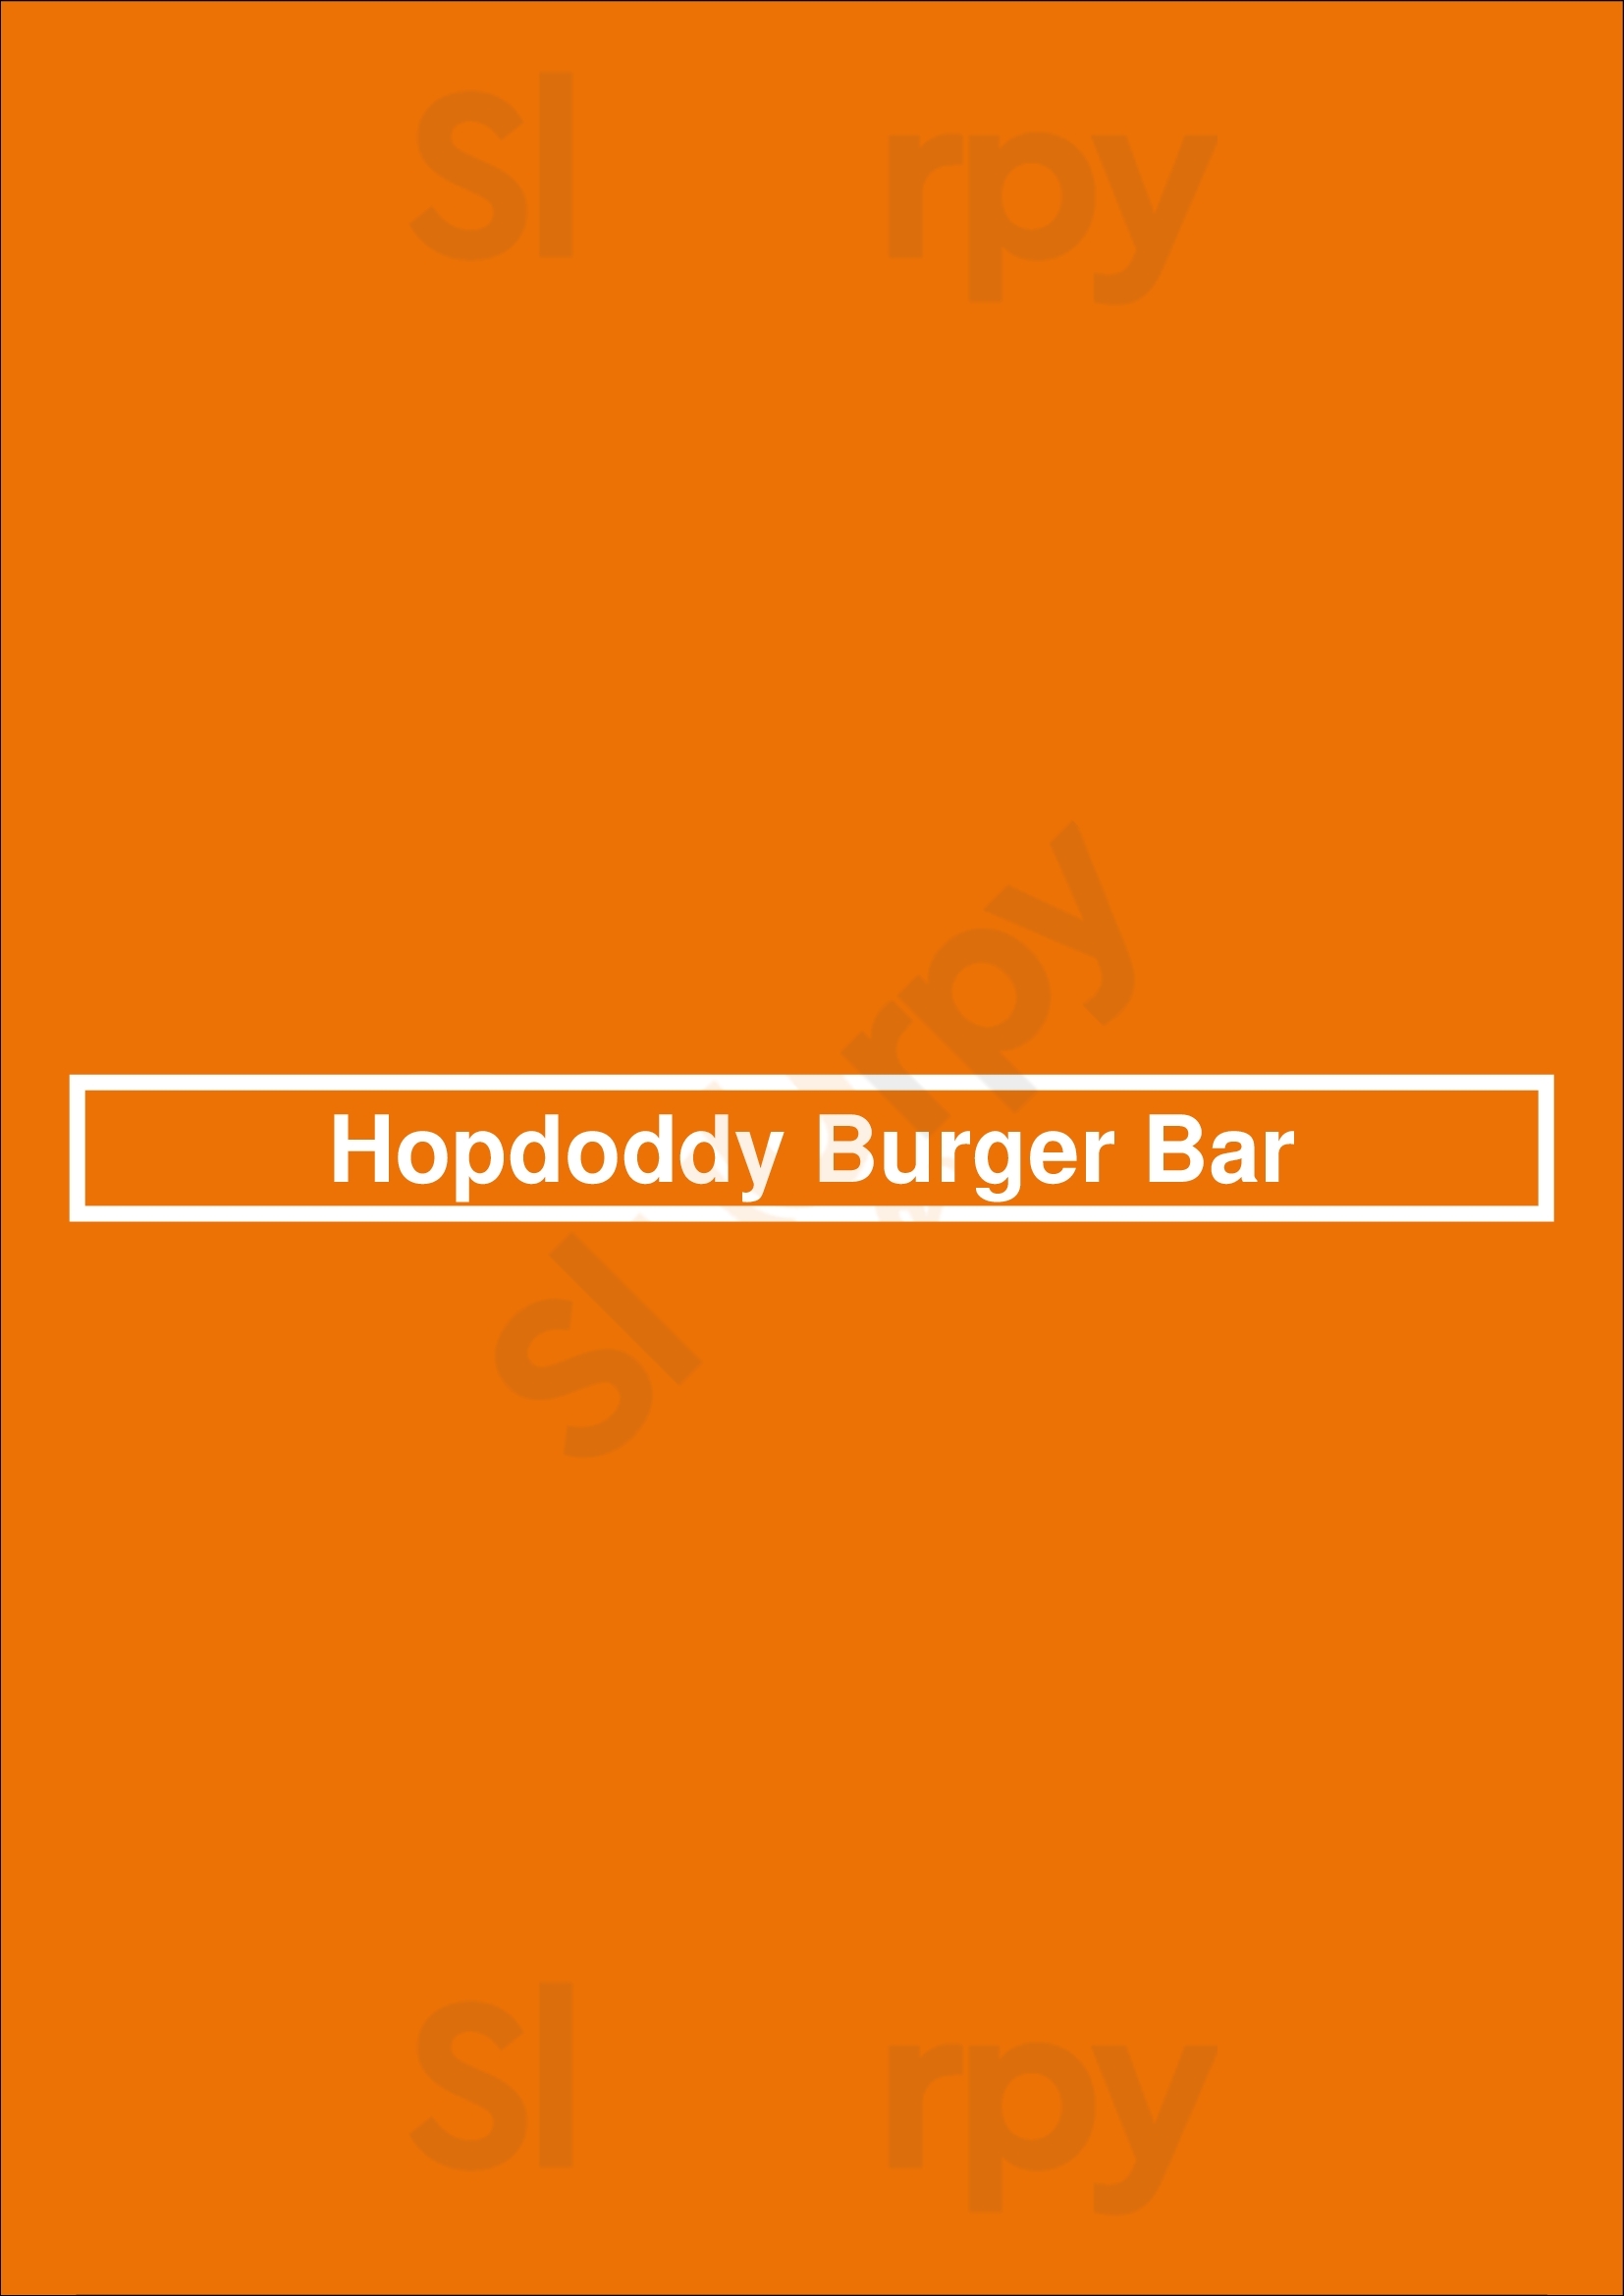 Hopdoddy Burger Bar Houston Menu - 1